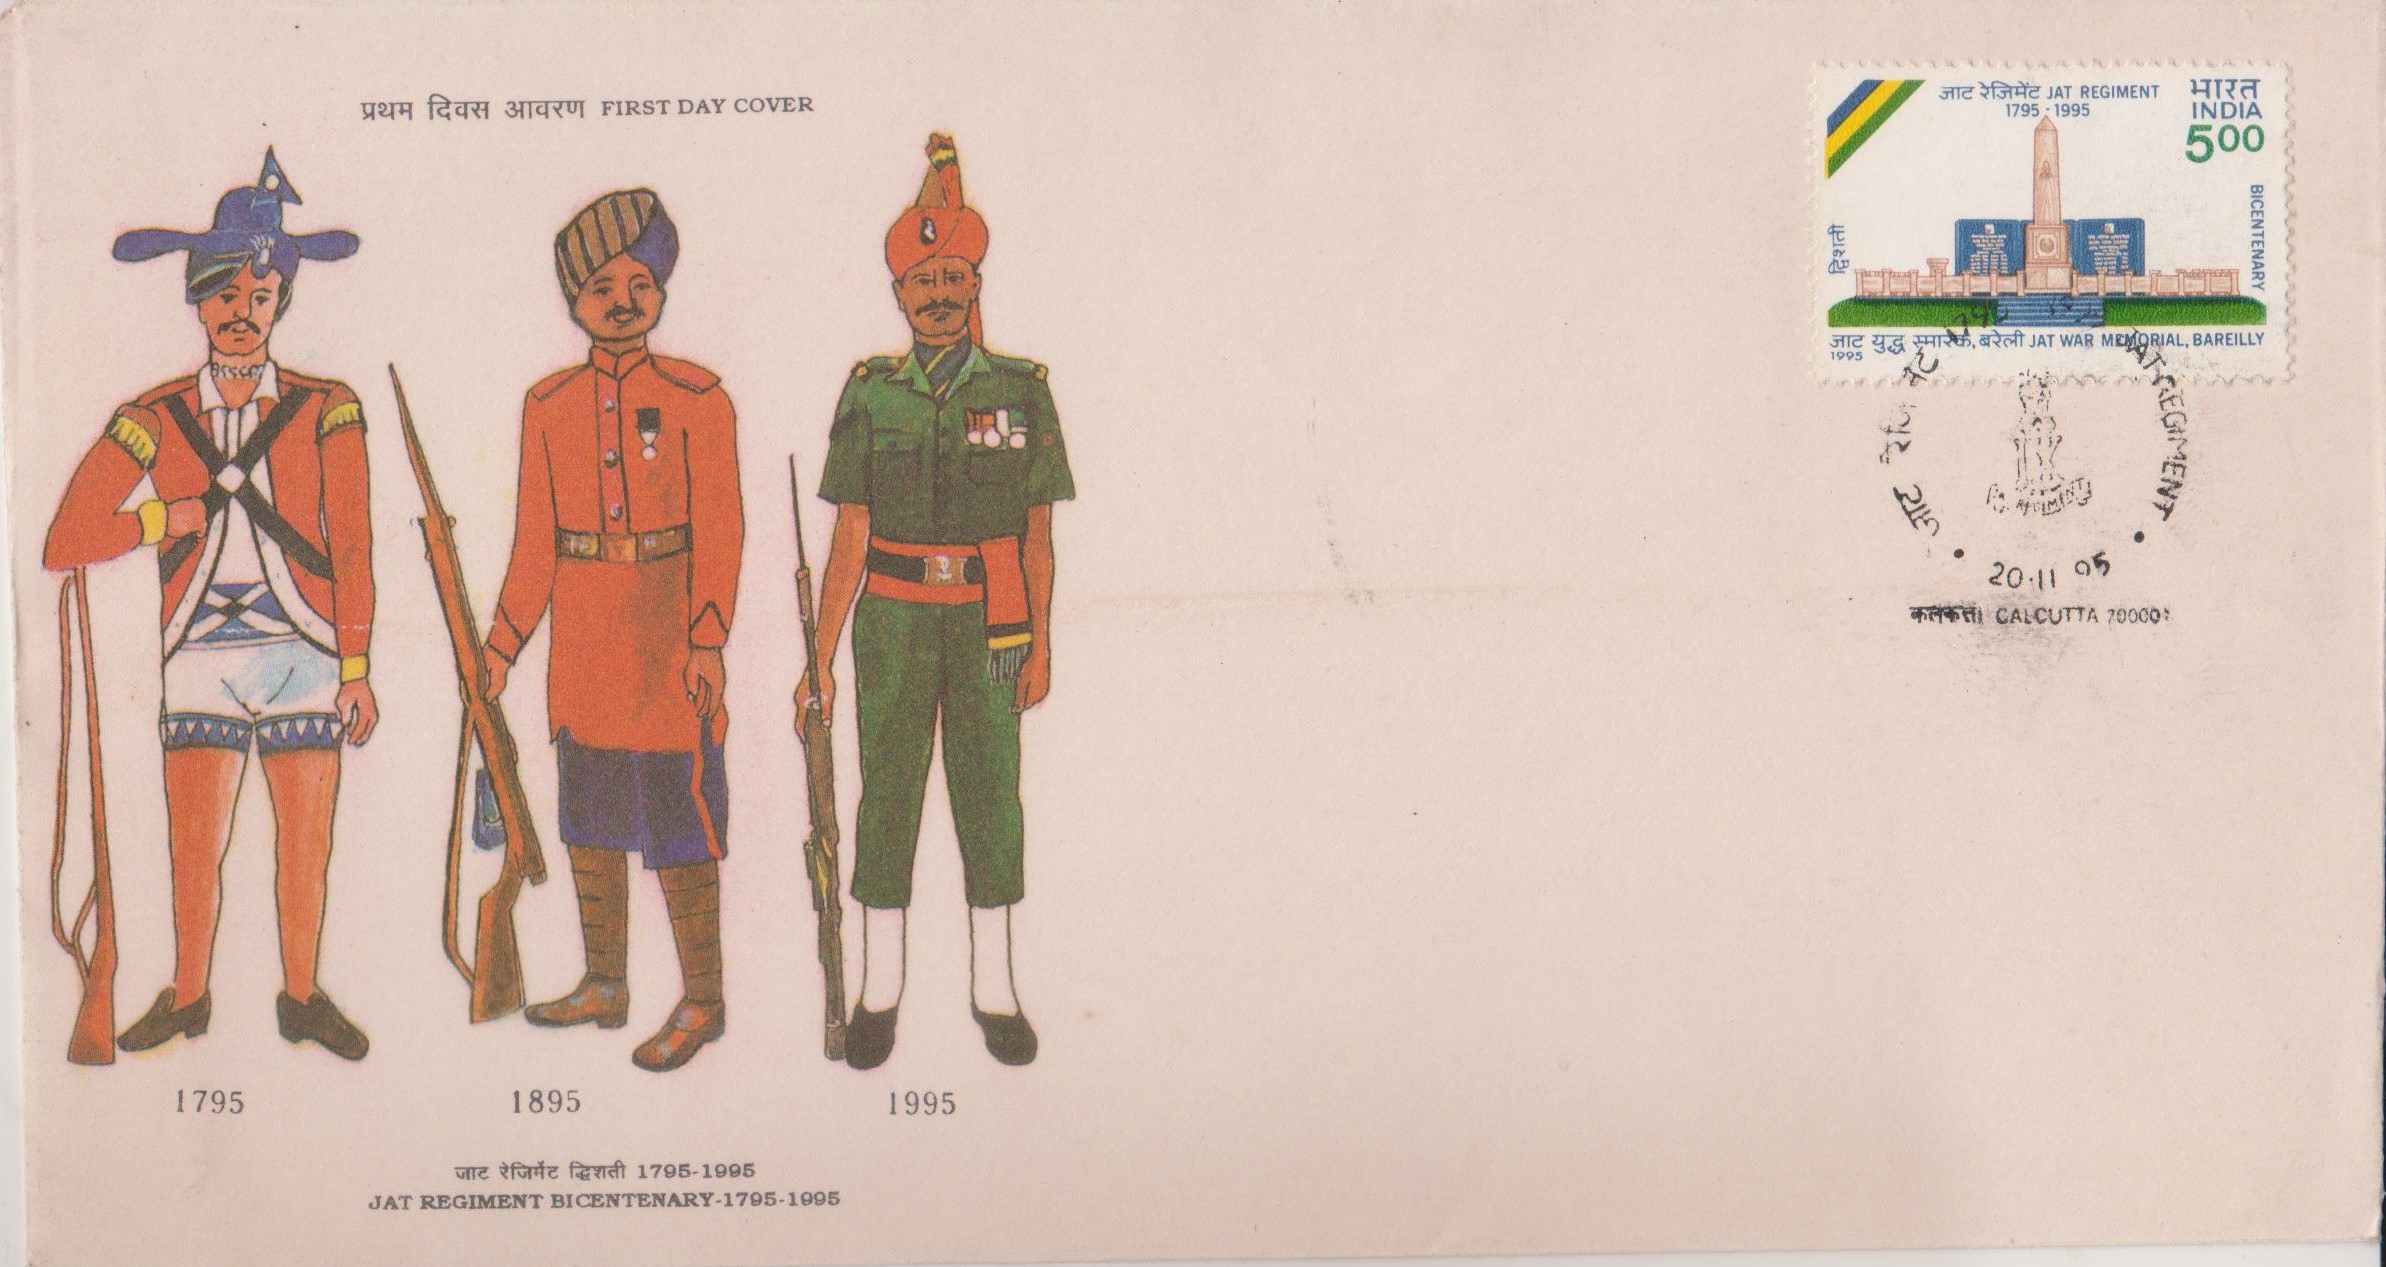 Uniforms of Jat Regiment over time